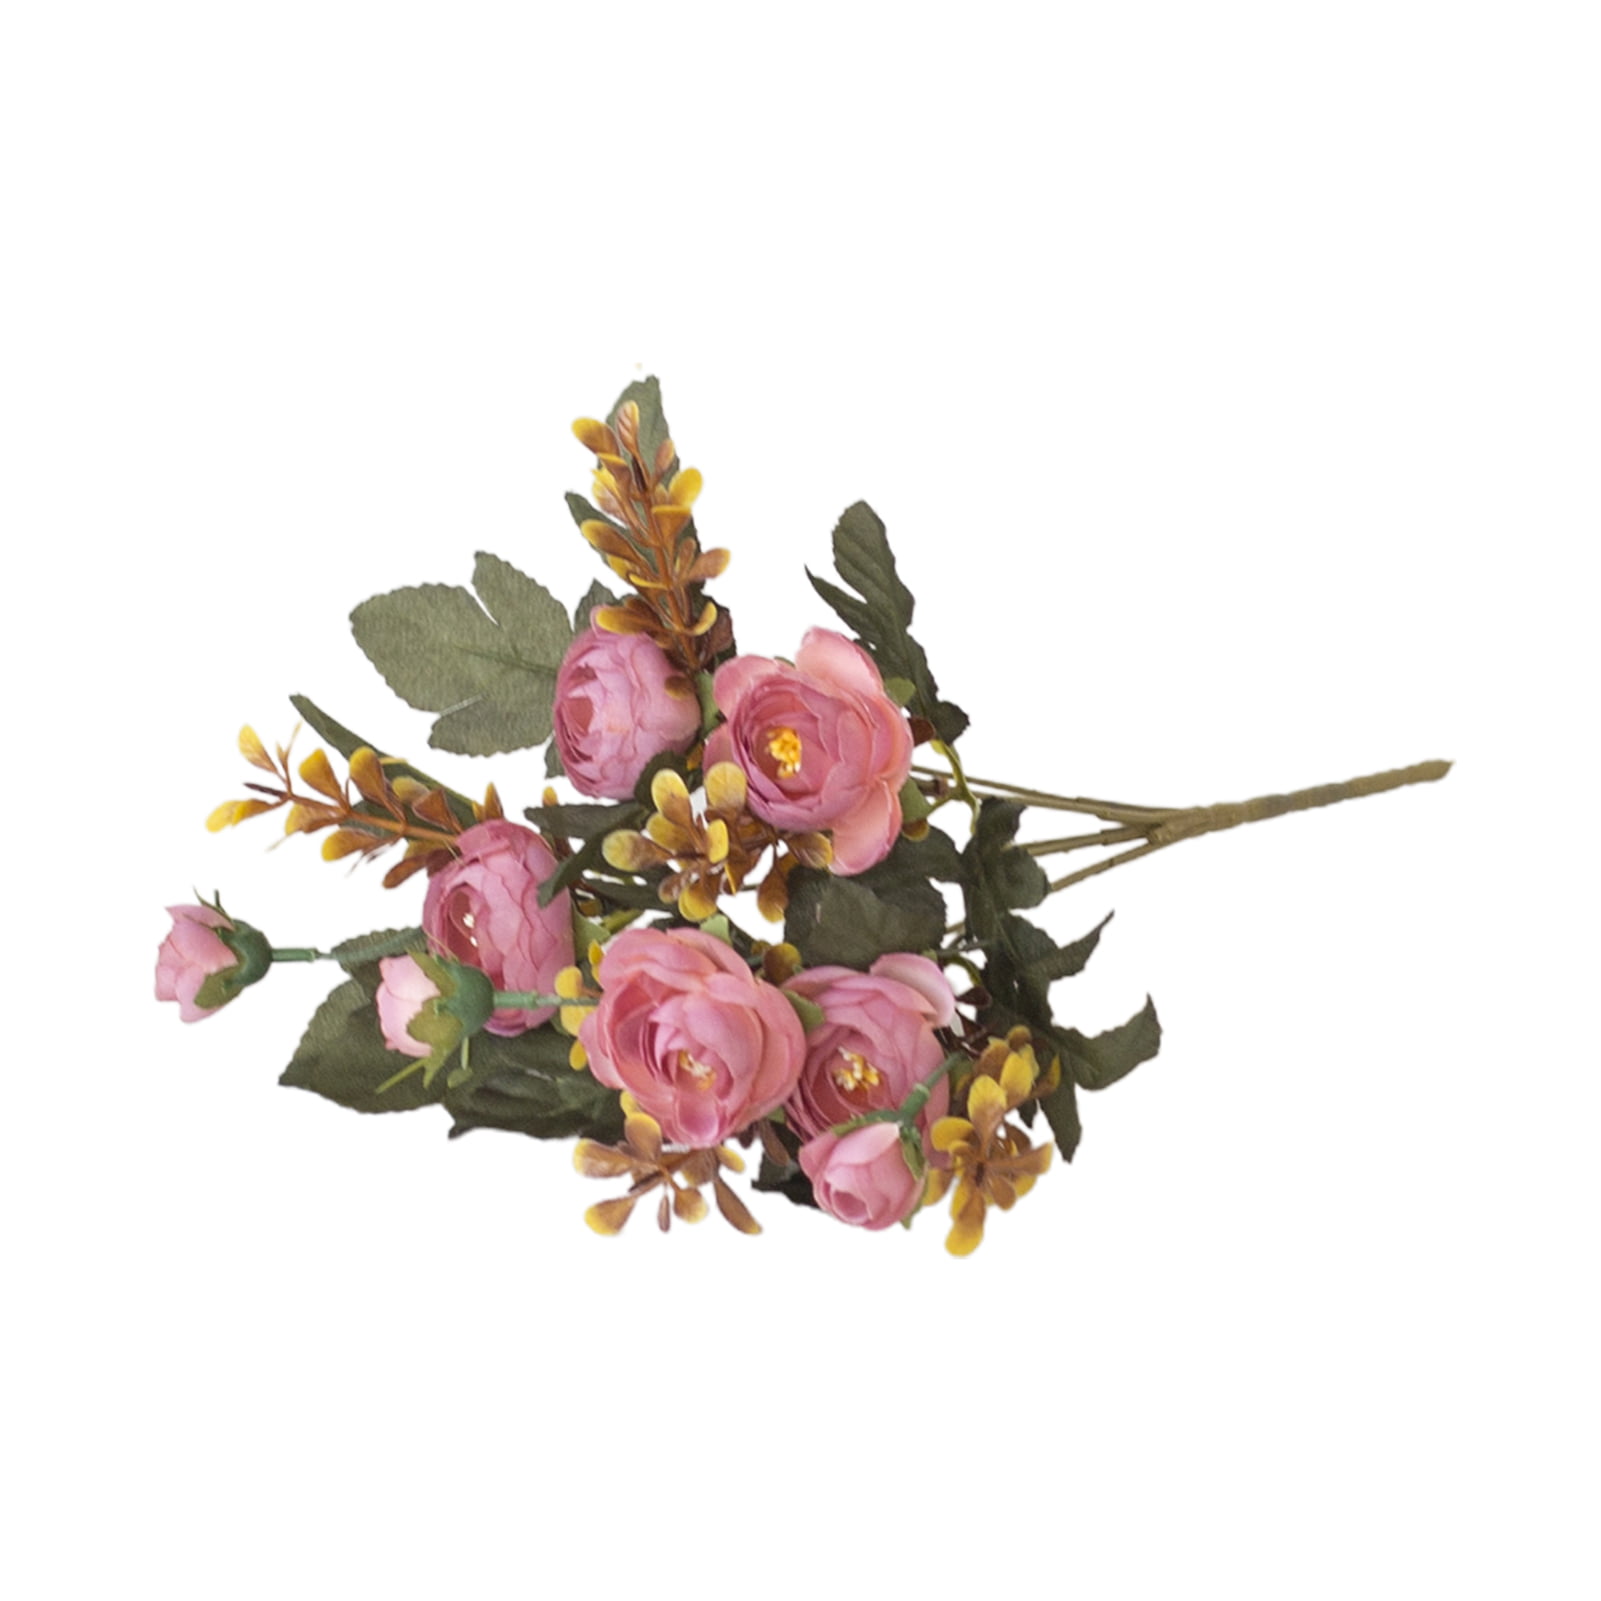 Details about   11 Stems Artificial Rose Silk Flower Wedding Flowers Purple 